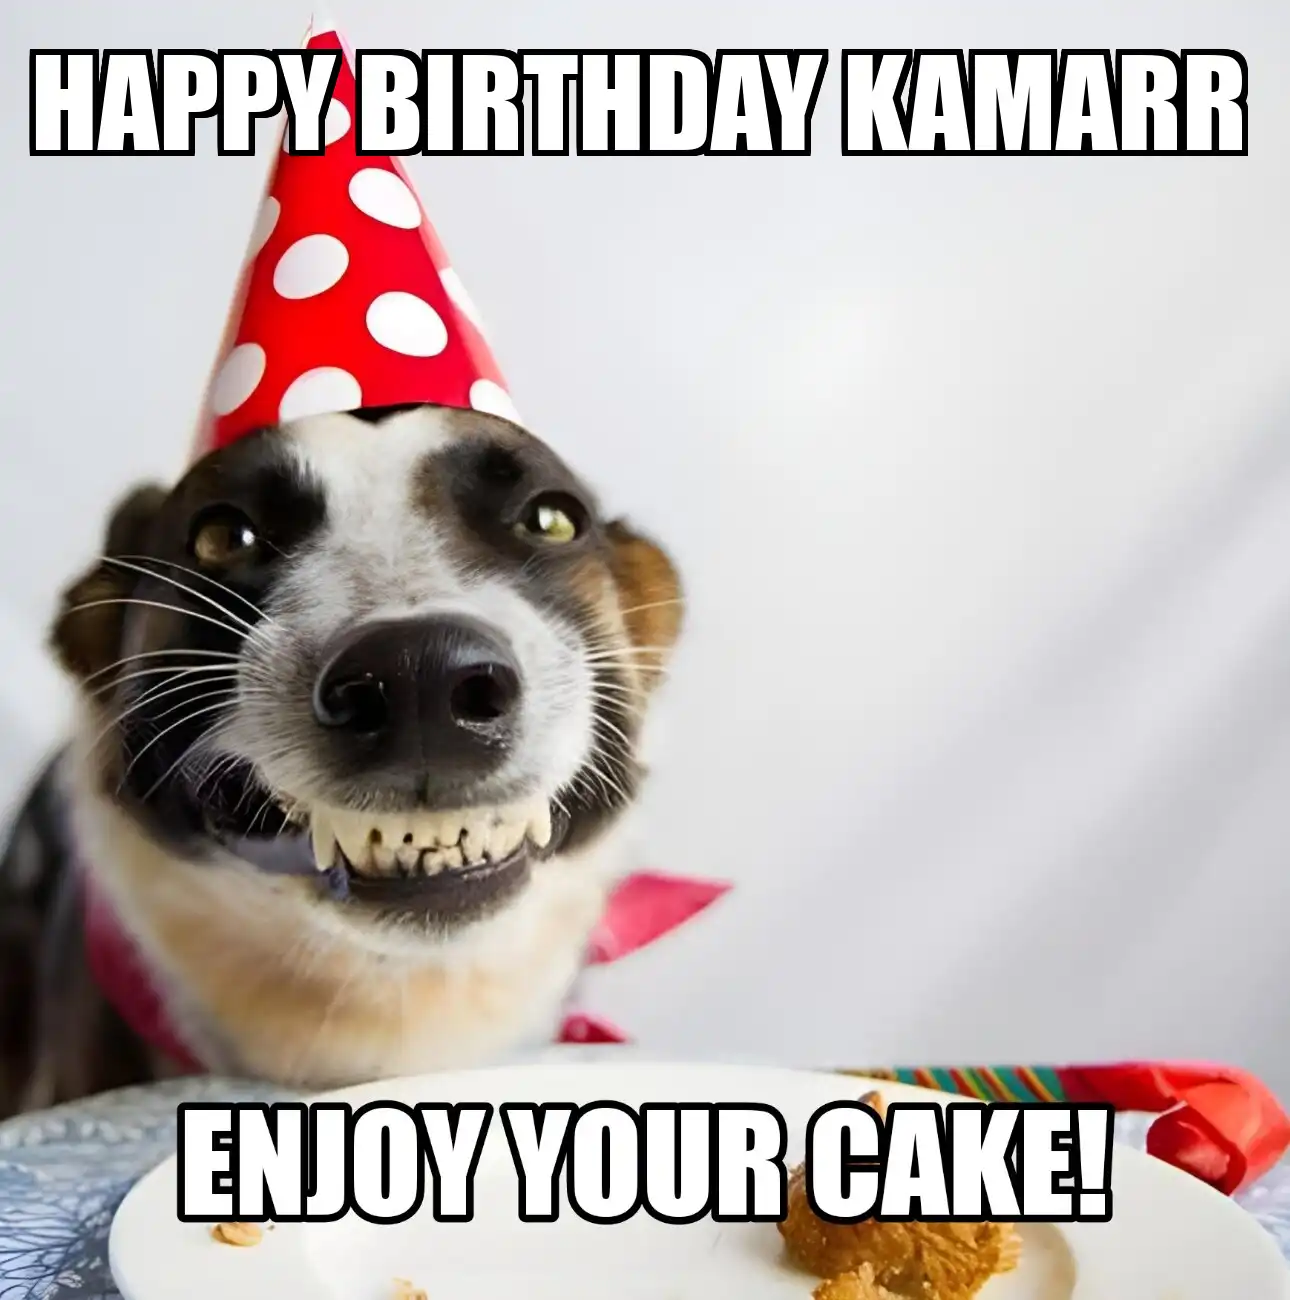 Happy Birthday Kamarr Enjoy Your Cake Dog Meme